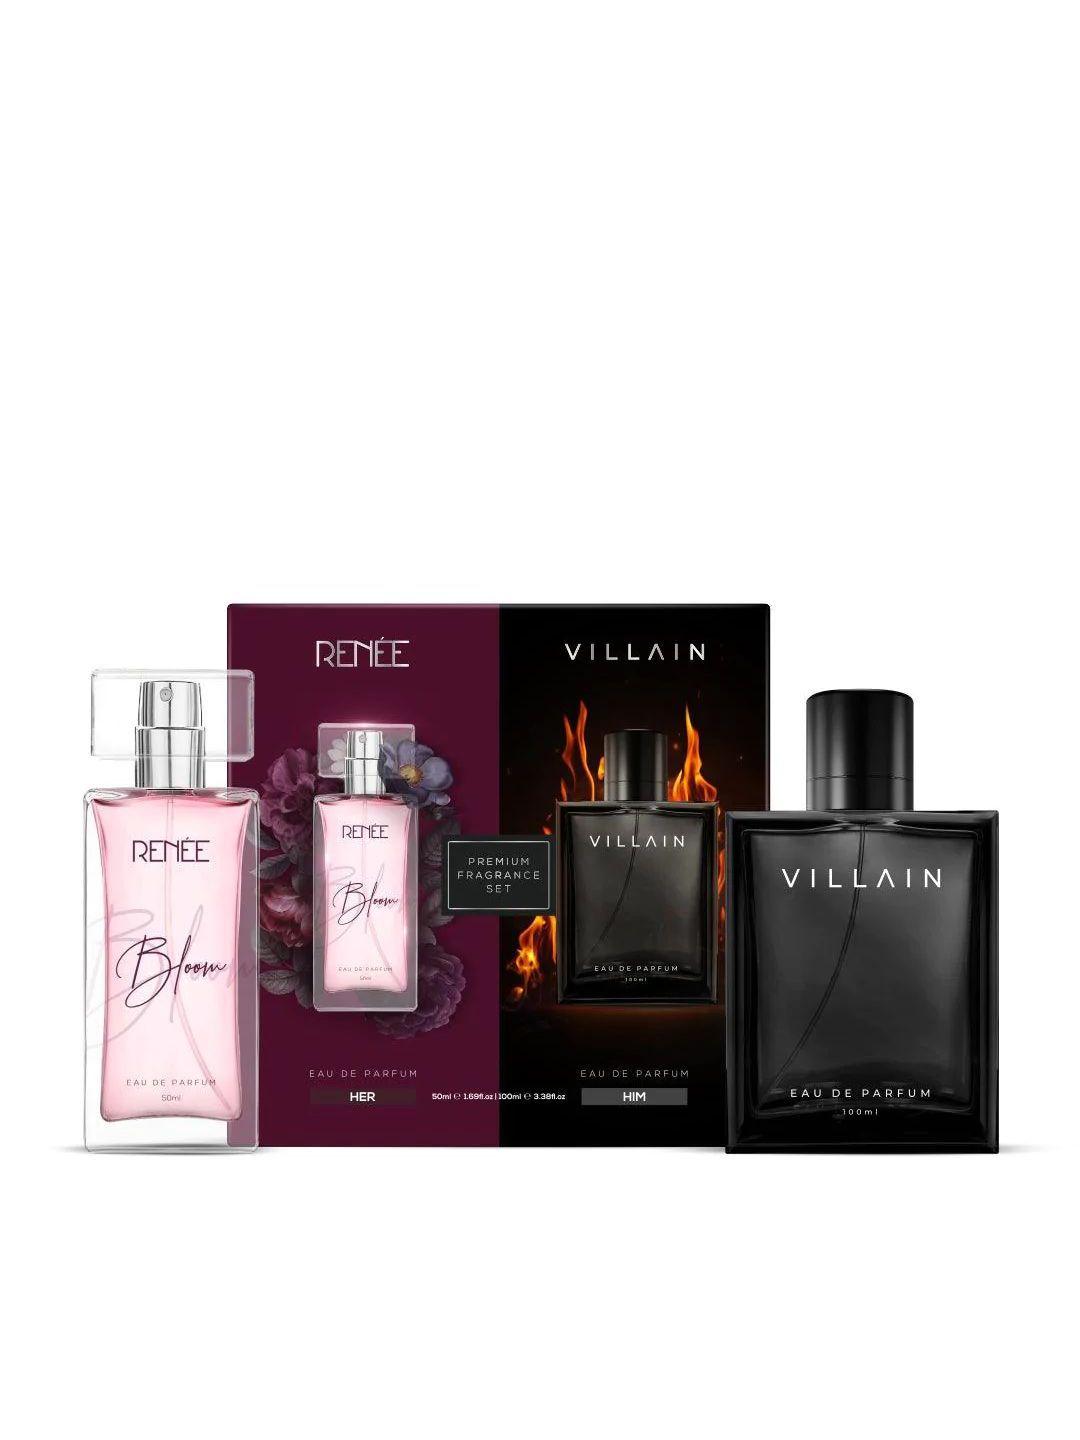 renee x villain eau de parfum premium fragrance set, bloom 50ml & classic 100ml